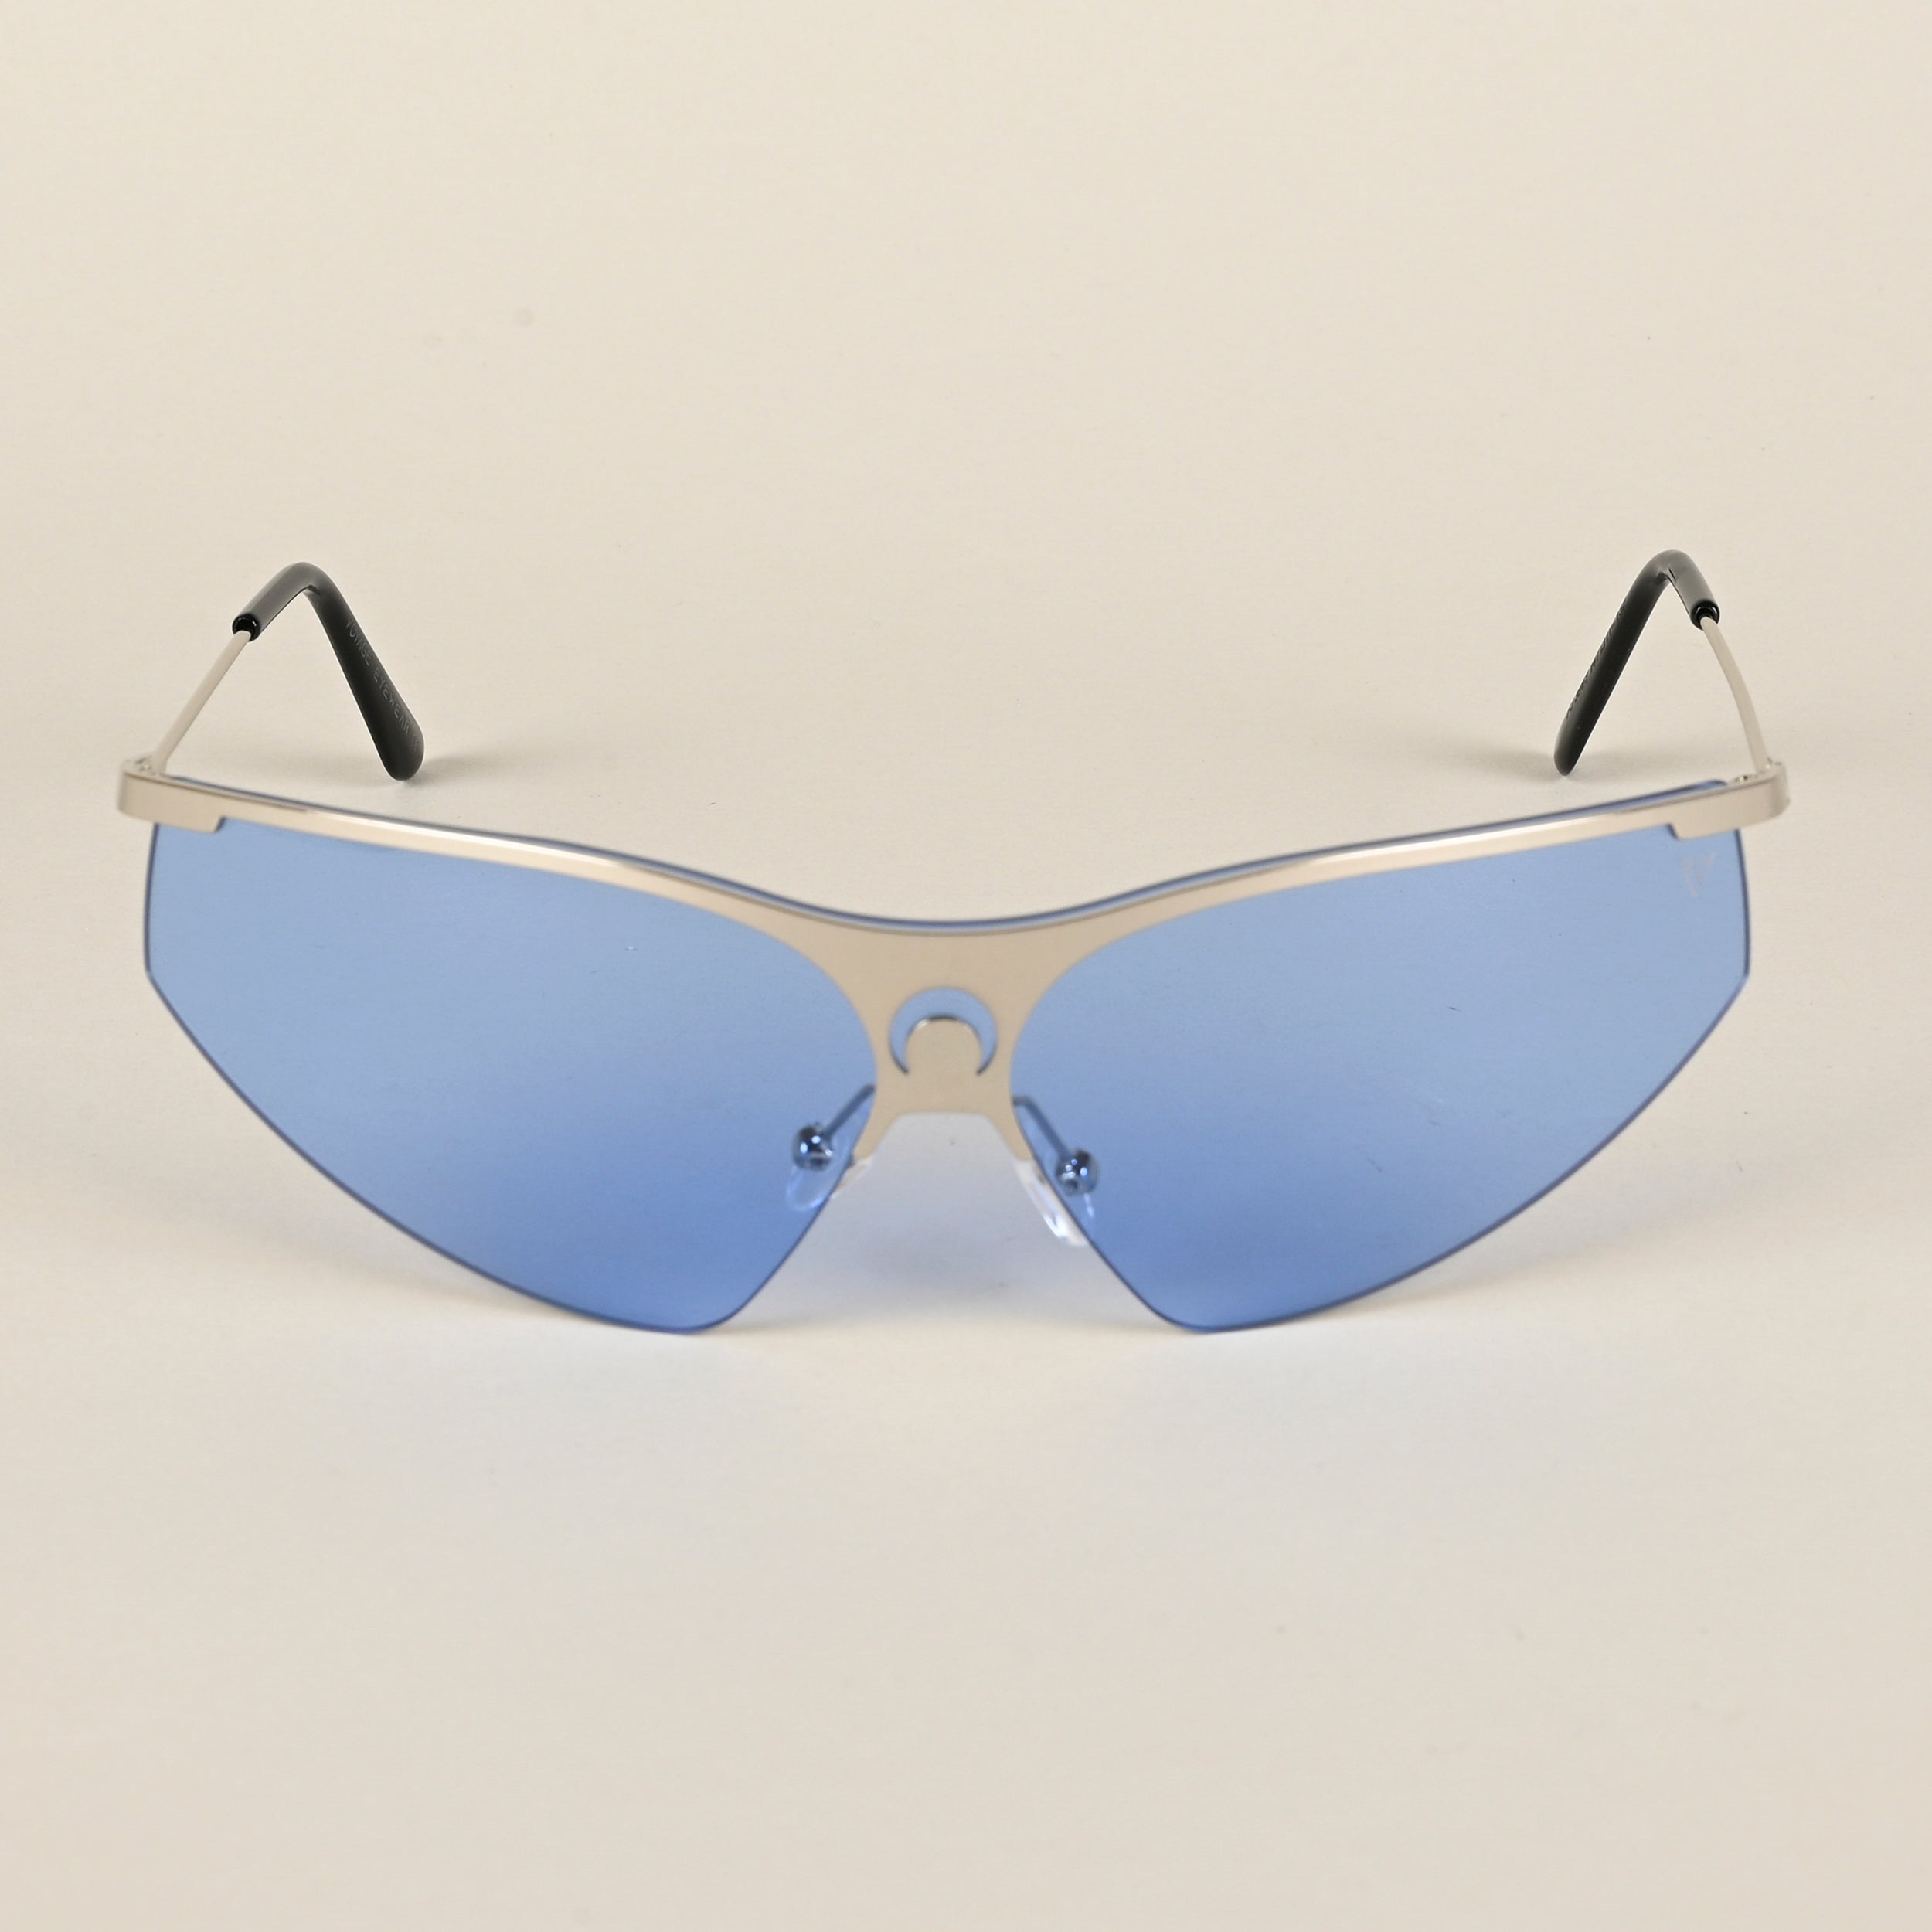 Voyage Blue Wrap-Around Sunglasses for Men & Women (3563MG4222)